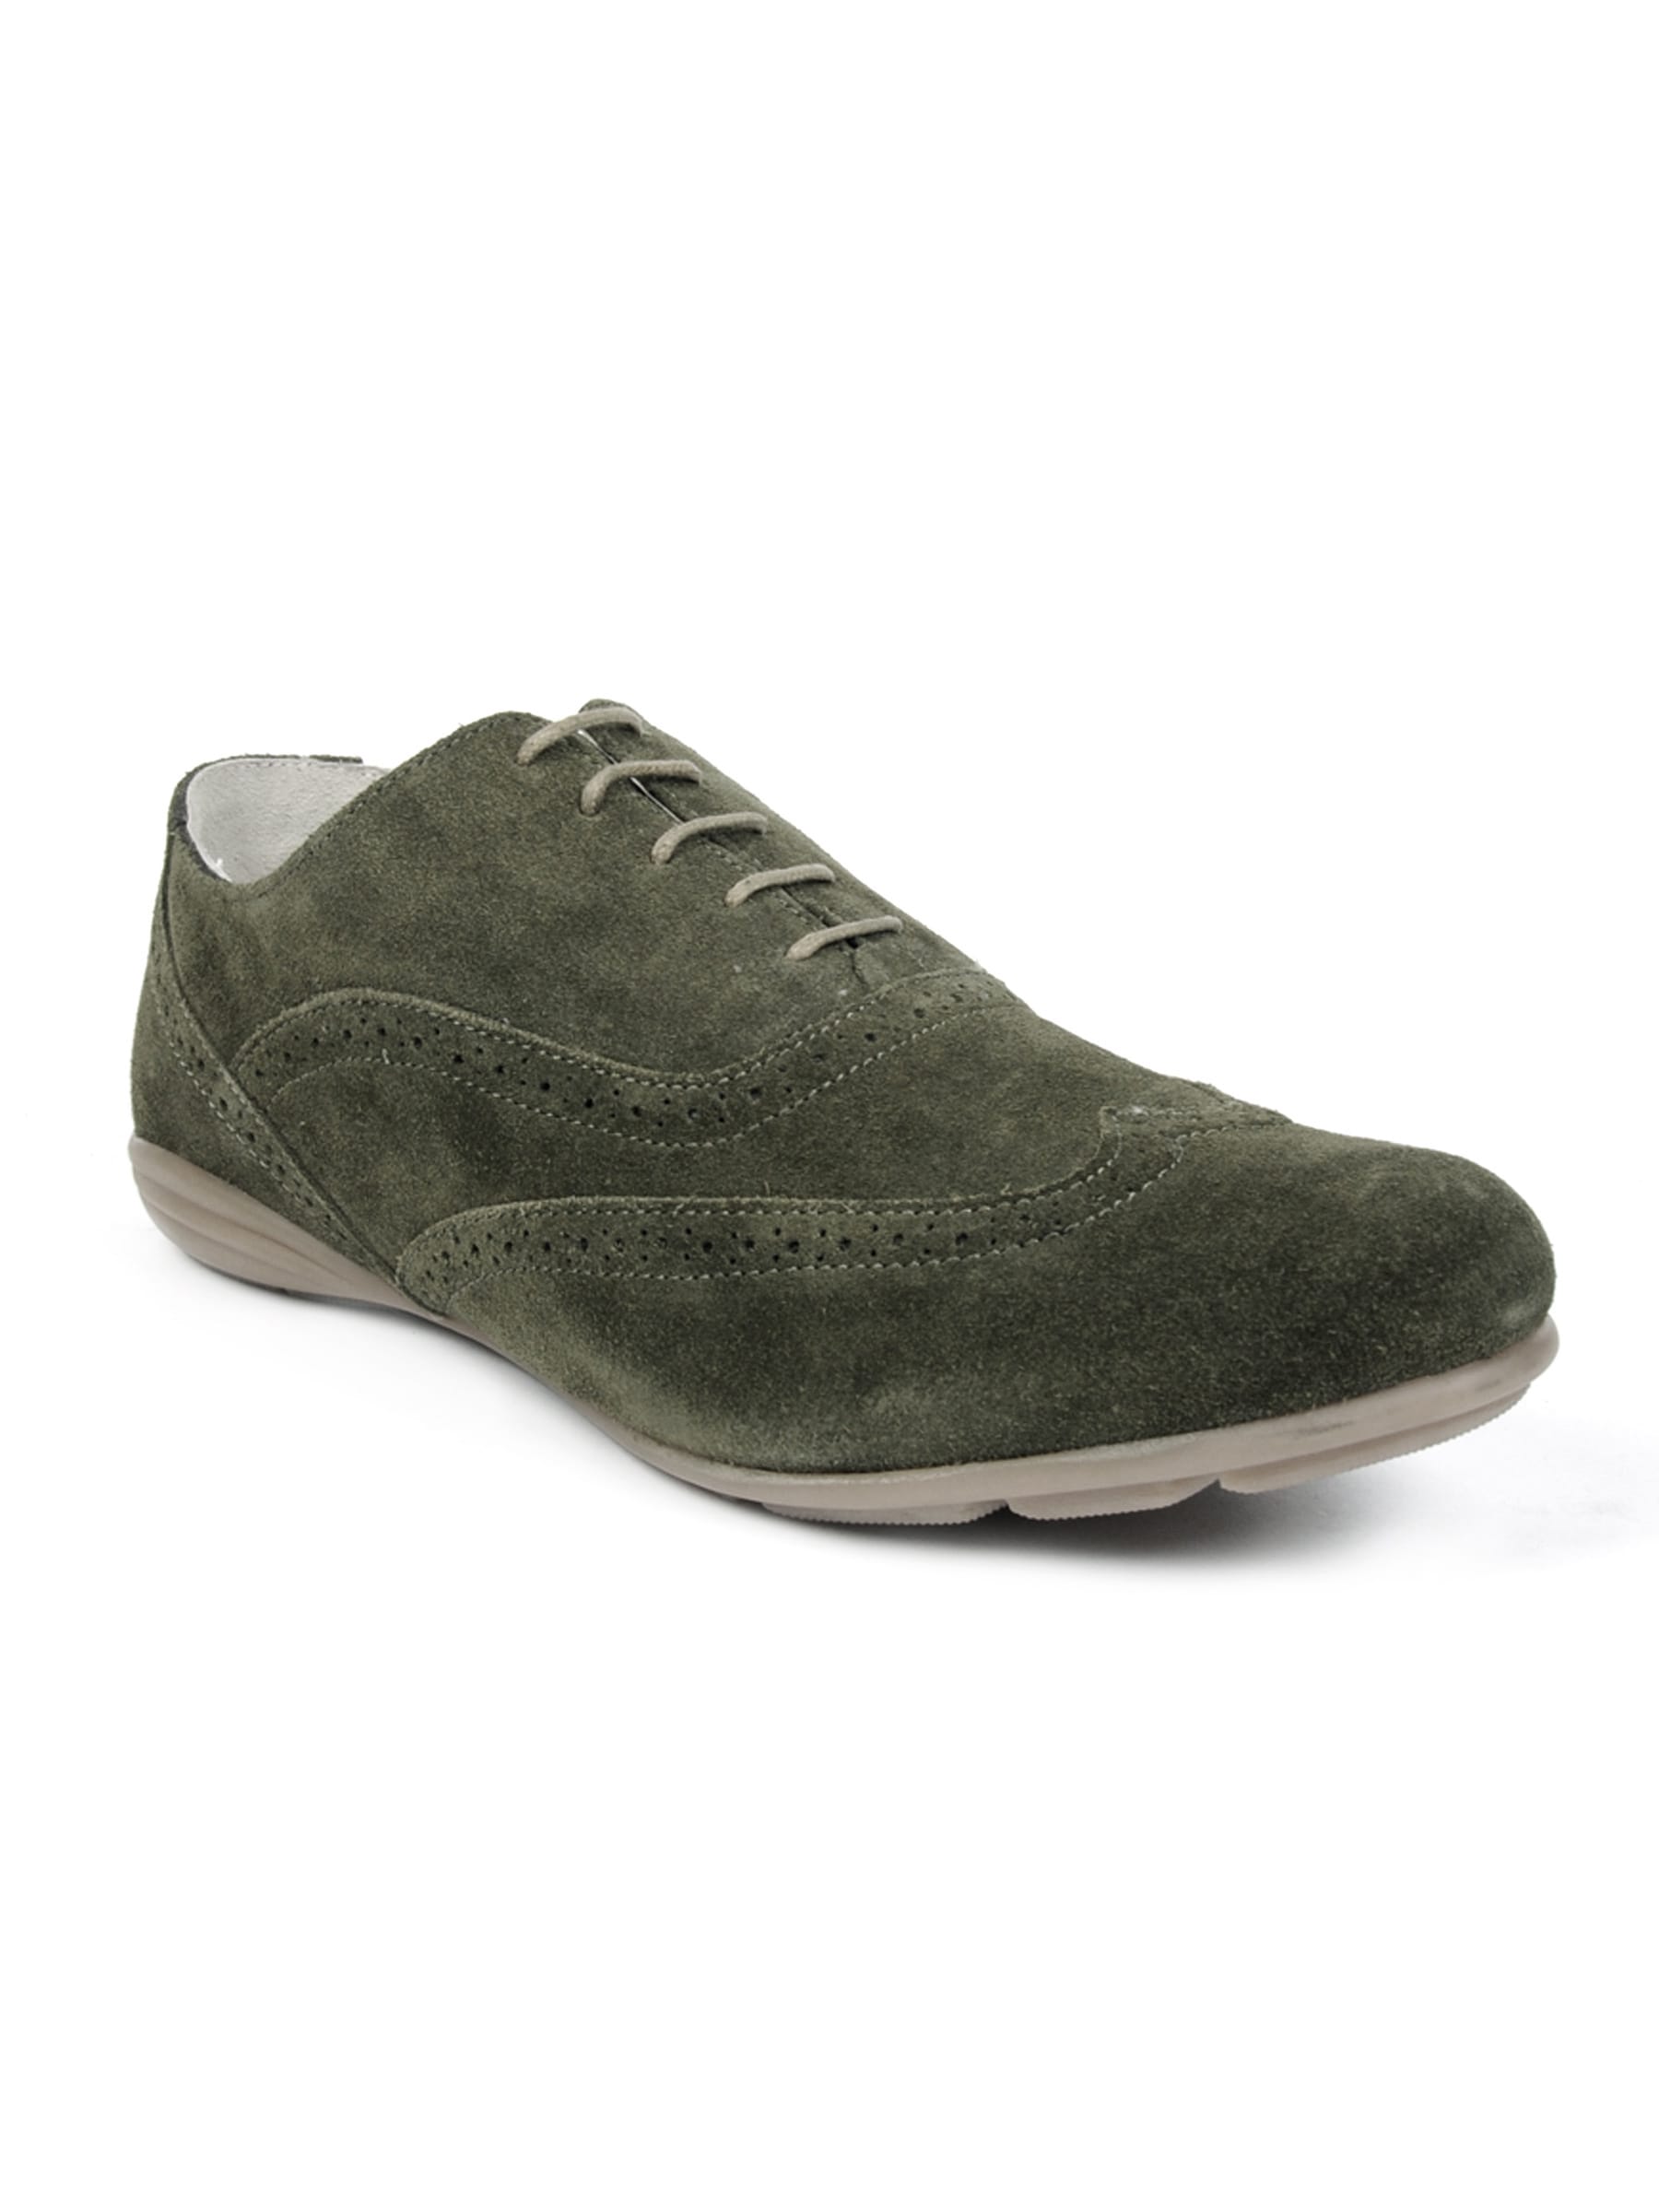 Carlton London Men Semi oxfords Green Casual Shoes